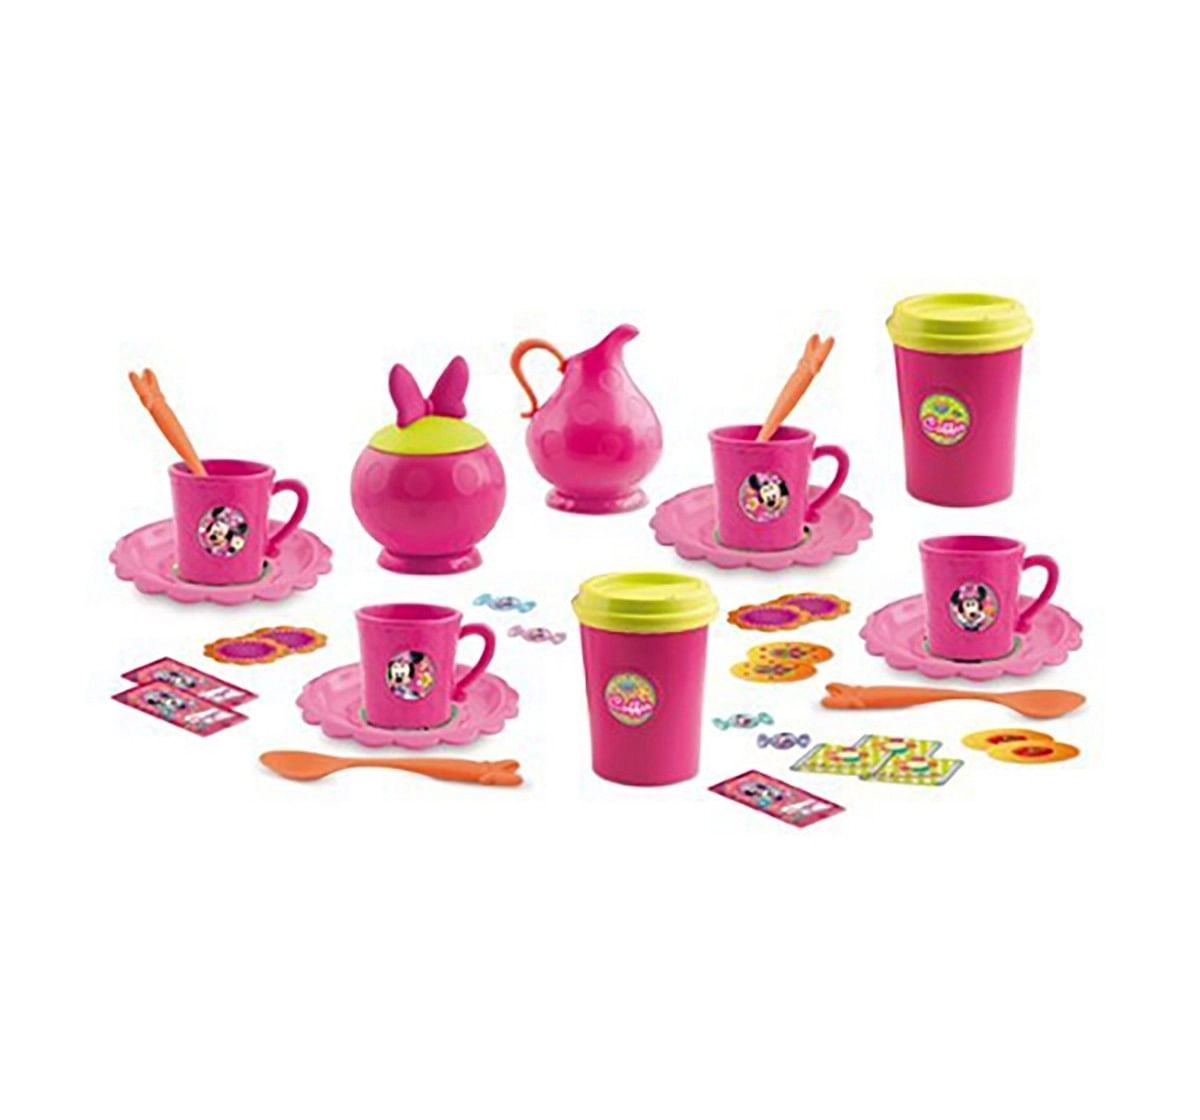 Imc Minnie Coffee Set, Multi Color Kitchen Sets & Appliances for age 3Y+ 